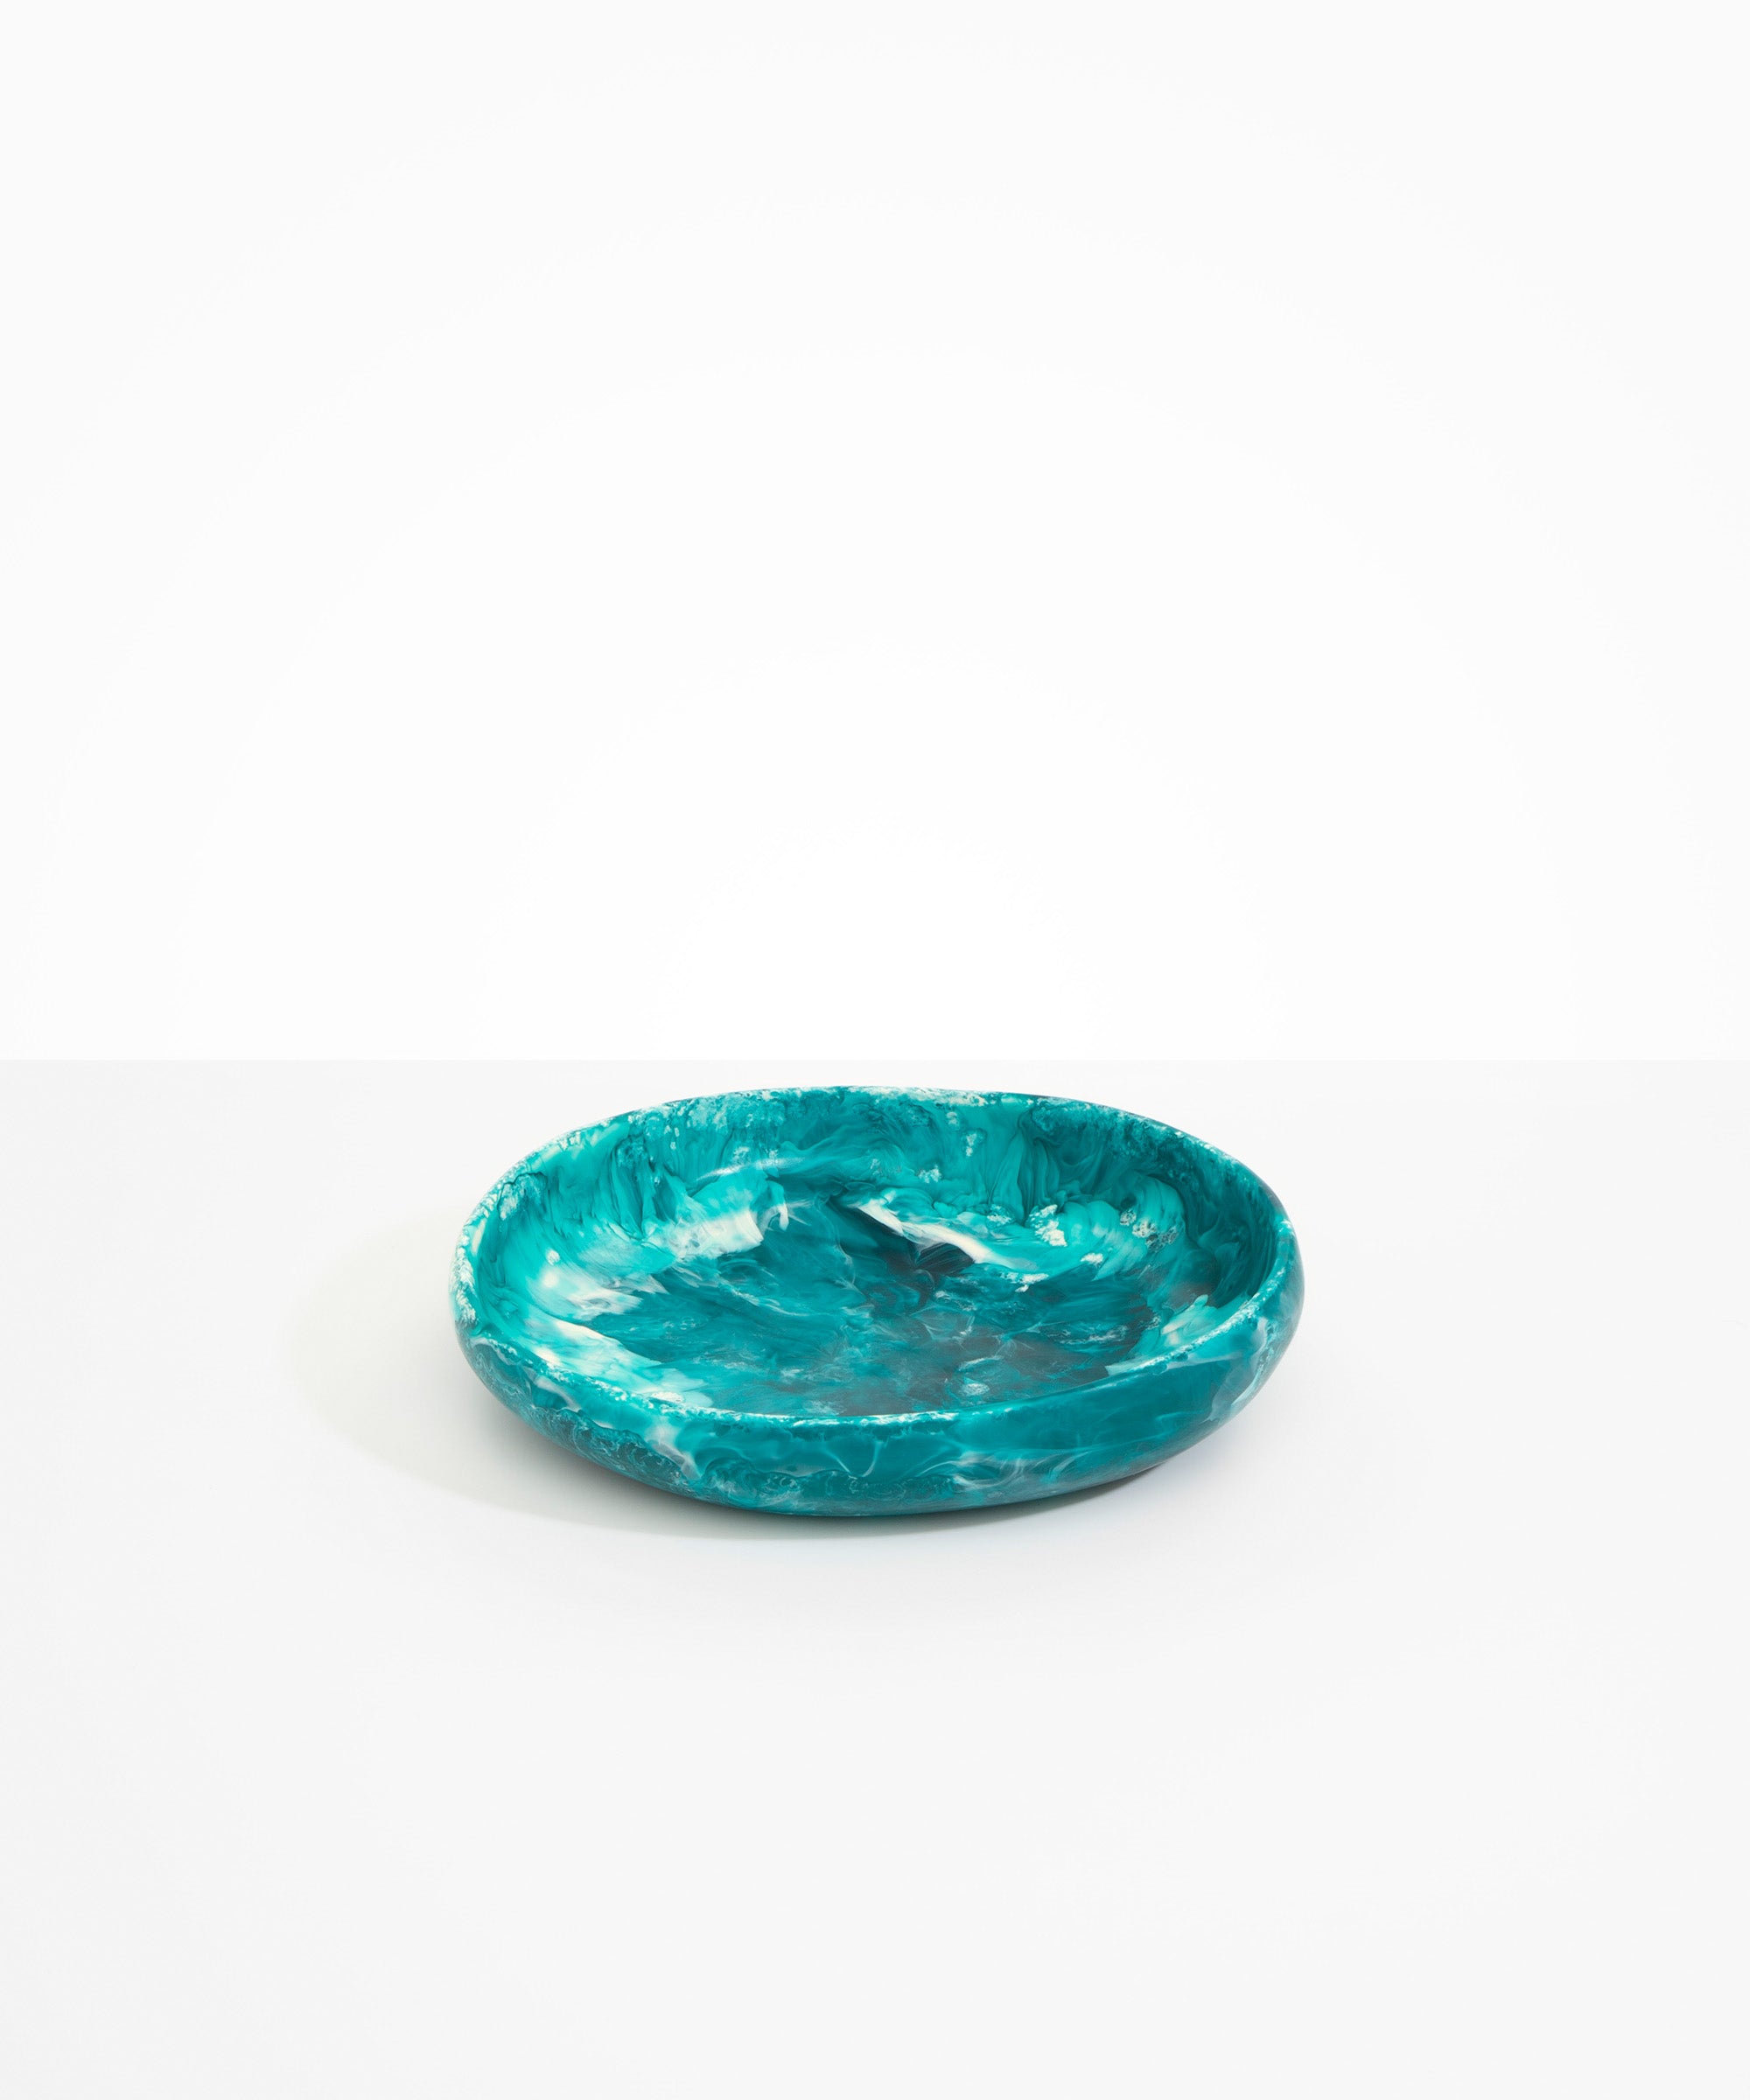 Dinosaur Designs Medium Earth Bowl Bowls in Lagoon color resin